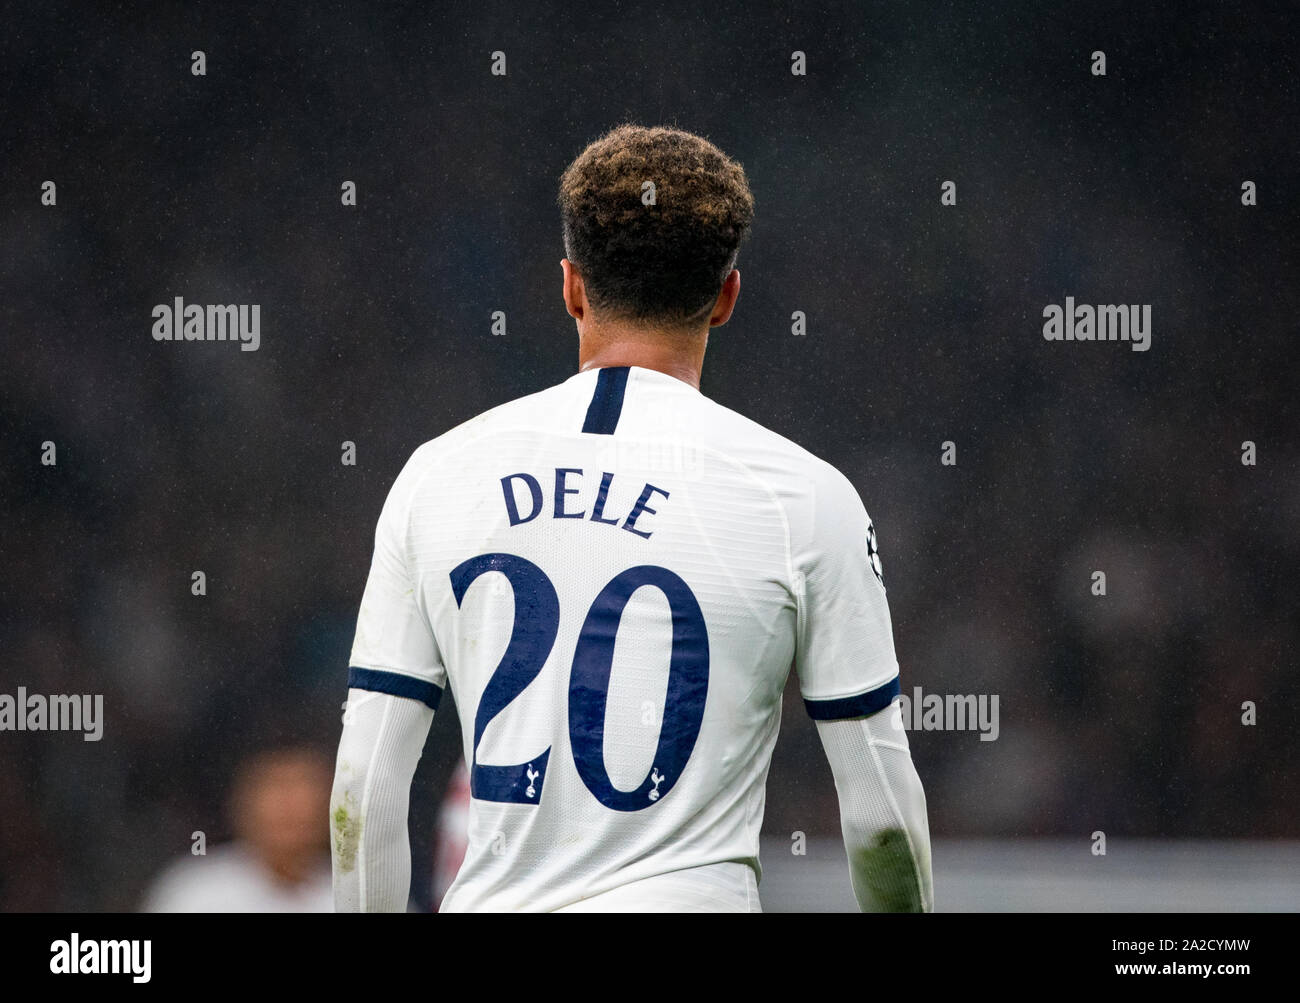 Tottenham Hotspur 2017/18 kit: Harry Kane, Dele Alli and Eric Dier reveal  Spurs' new shirts for upcoming season